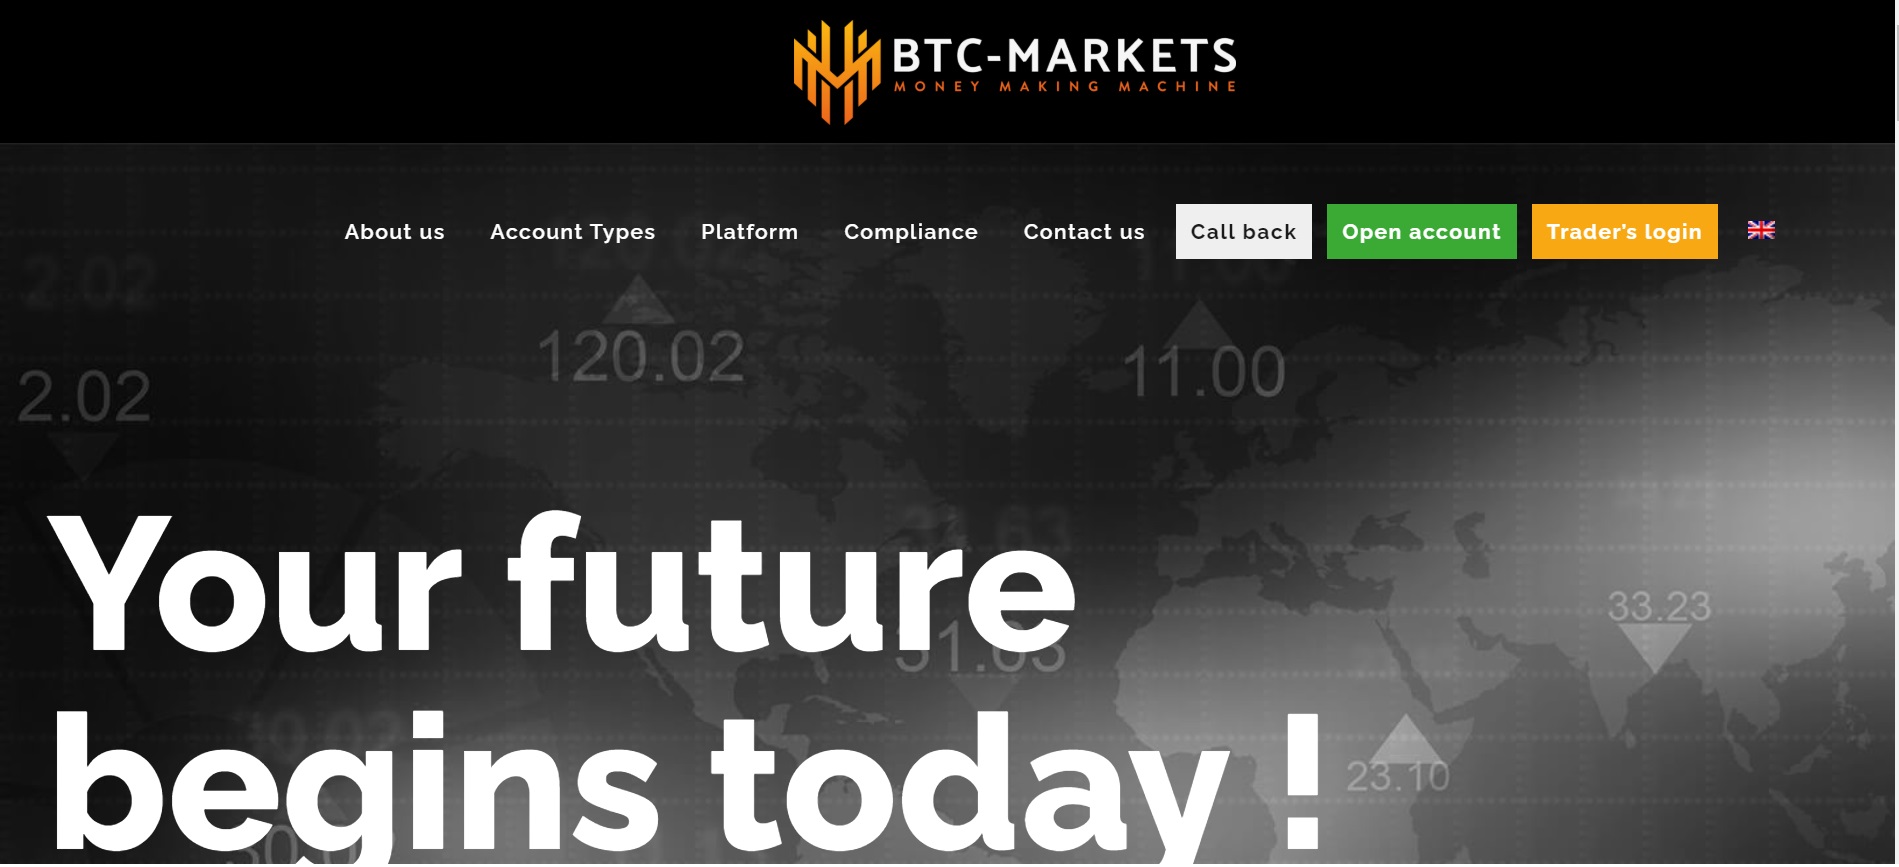 btc markets forum